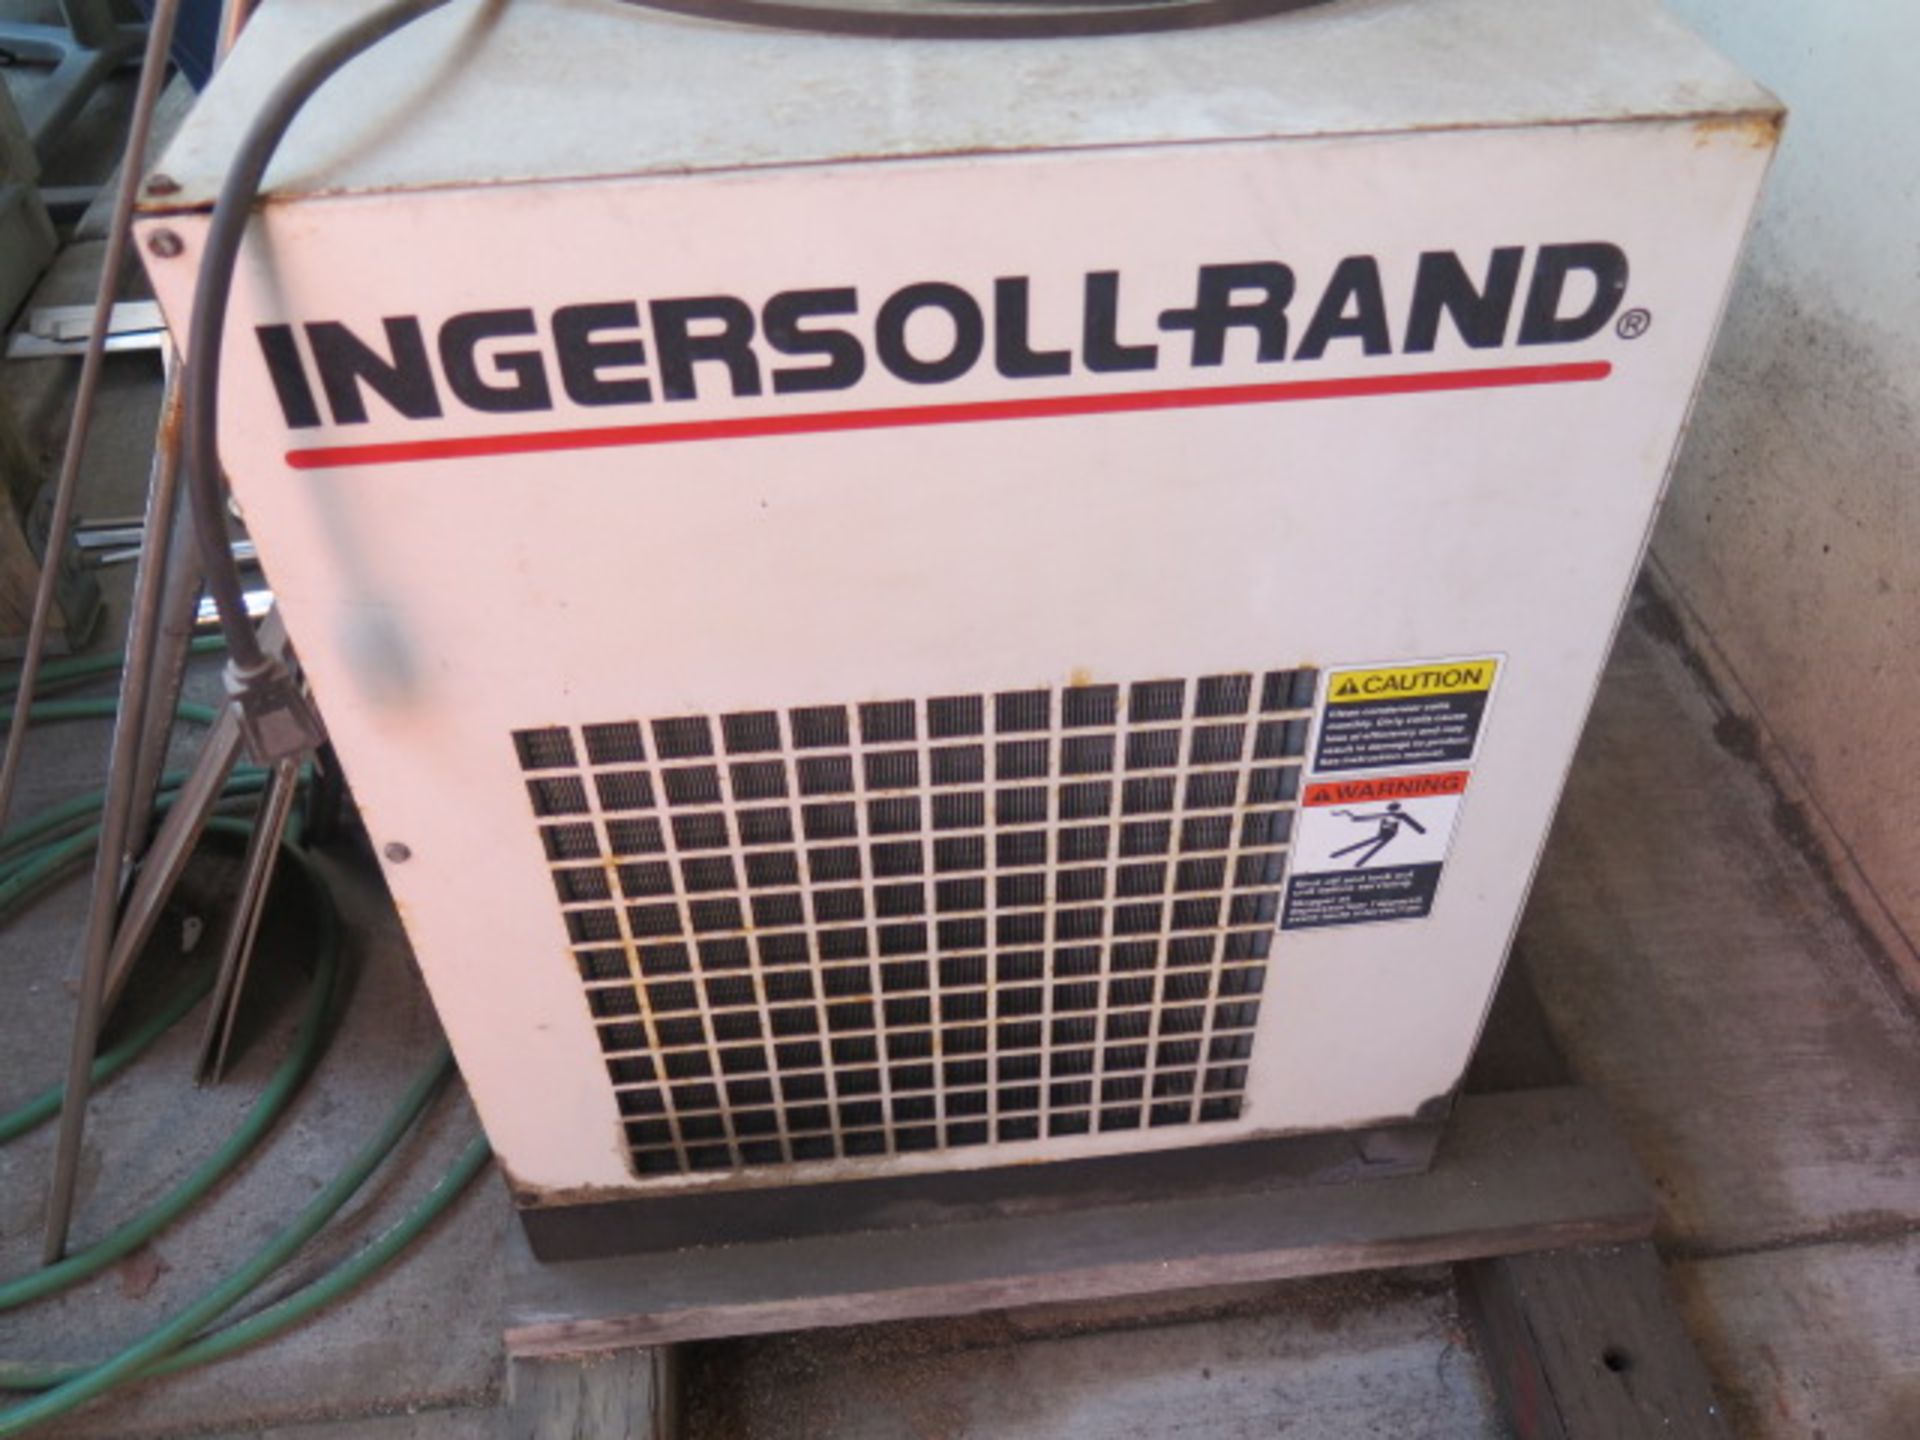 Ingersoll Rand EP10-ESP 10Hp Rotary Air Compressor s/n AN1625U46033 w/ 35 CFM @ 125 PSIG, 120 Gallon - Image 3 of 3